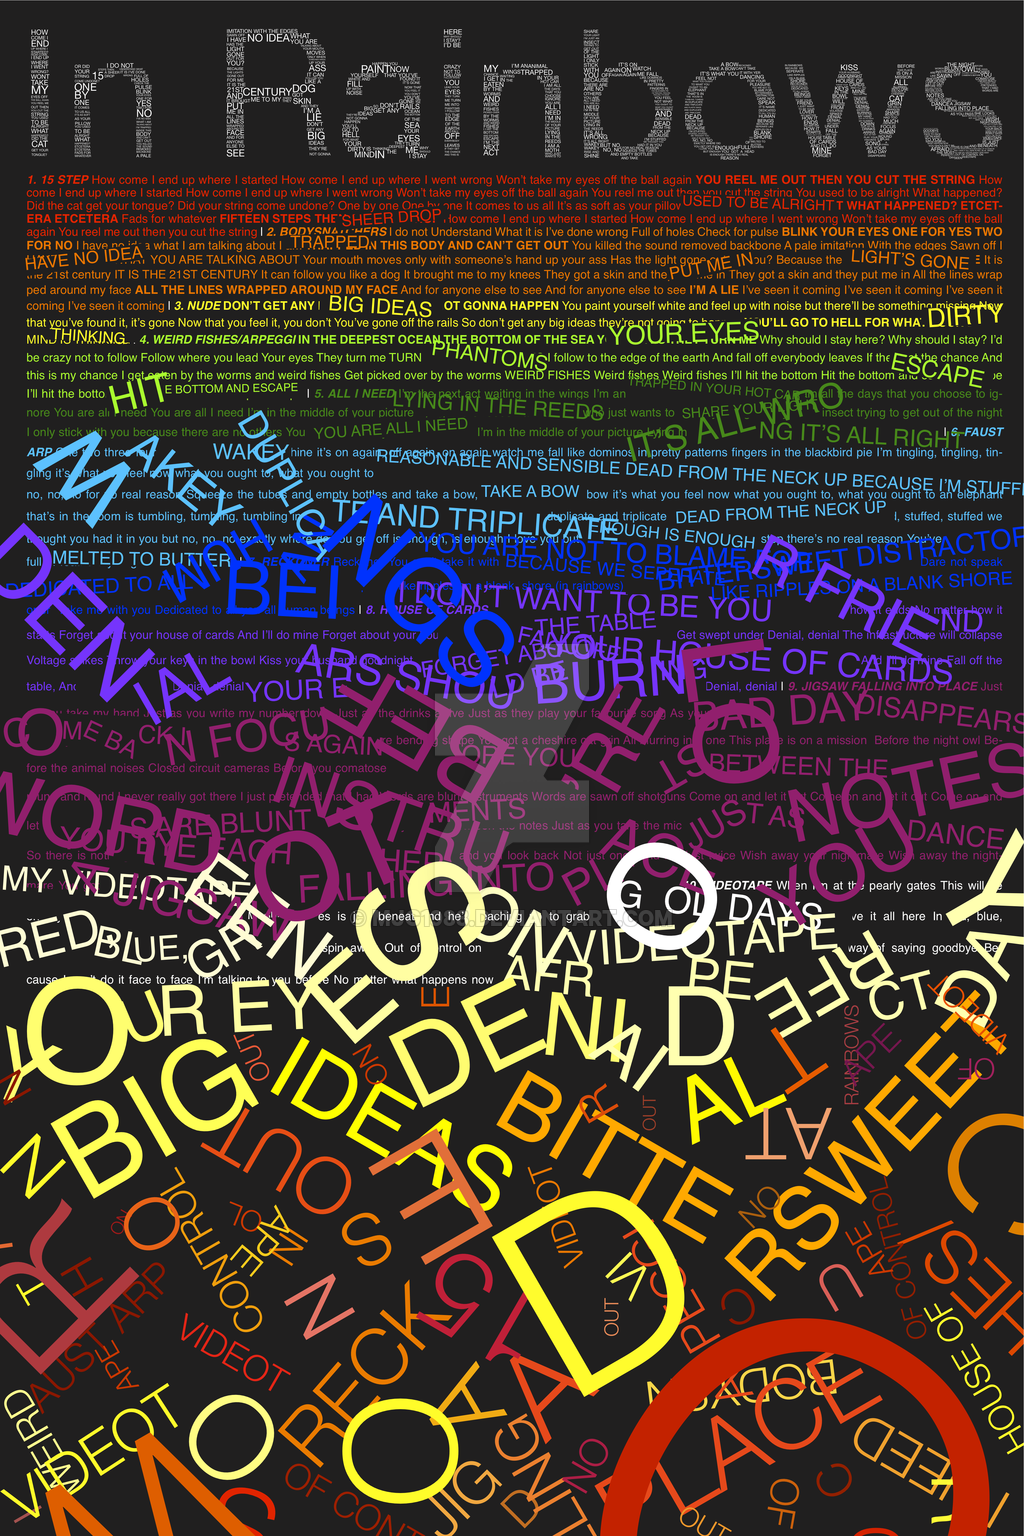 Radiohead In Rainbows Poster by mjg1988 on DeviantArt